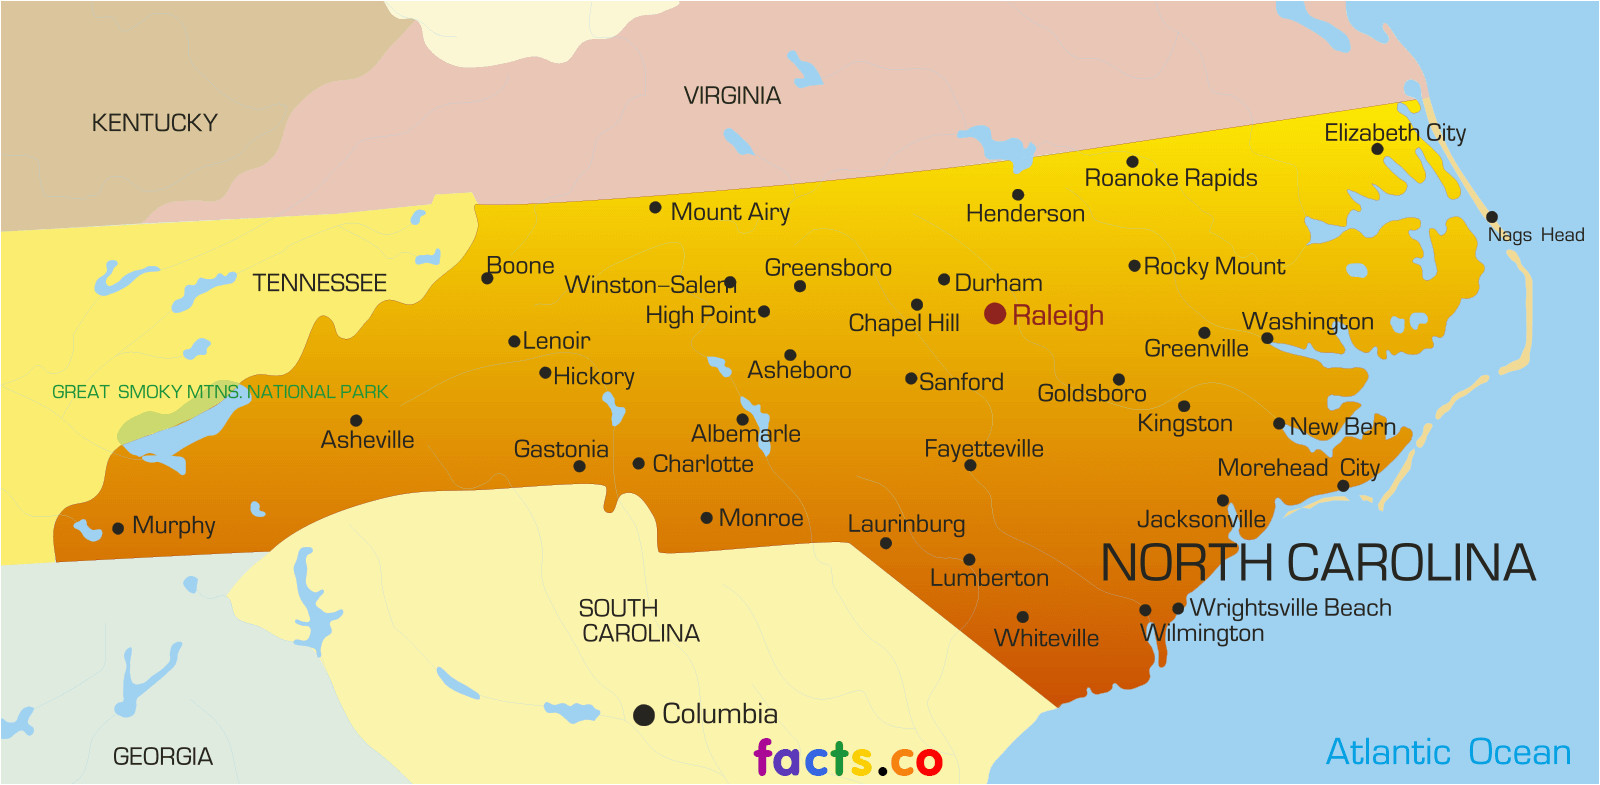 Sanford north Carolina Map north Carolina Maps with Cities and Travel Information Download